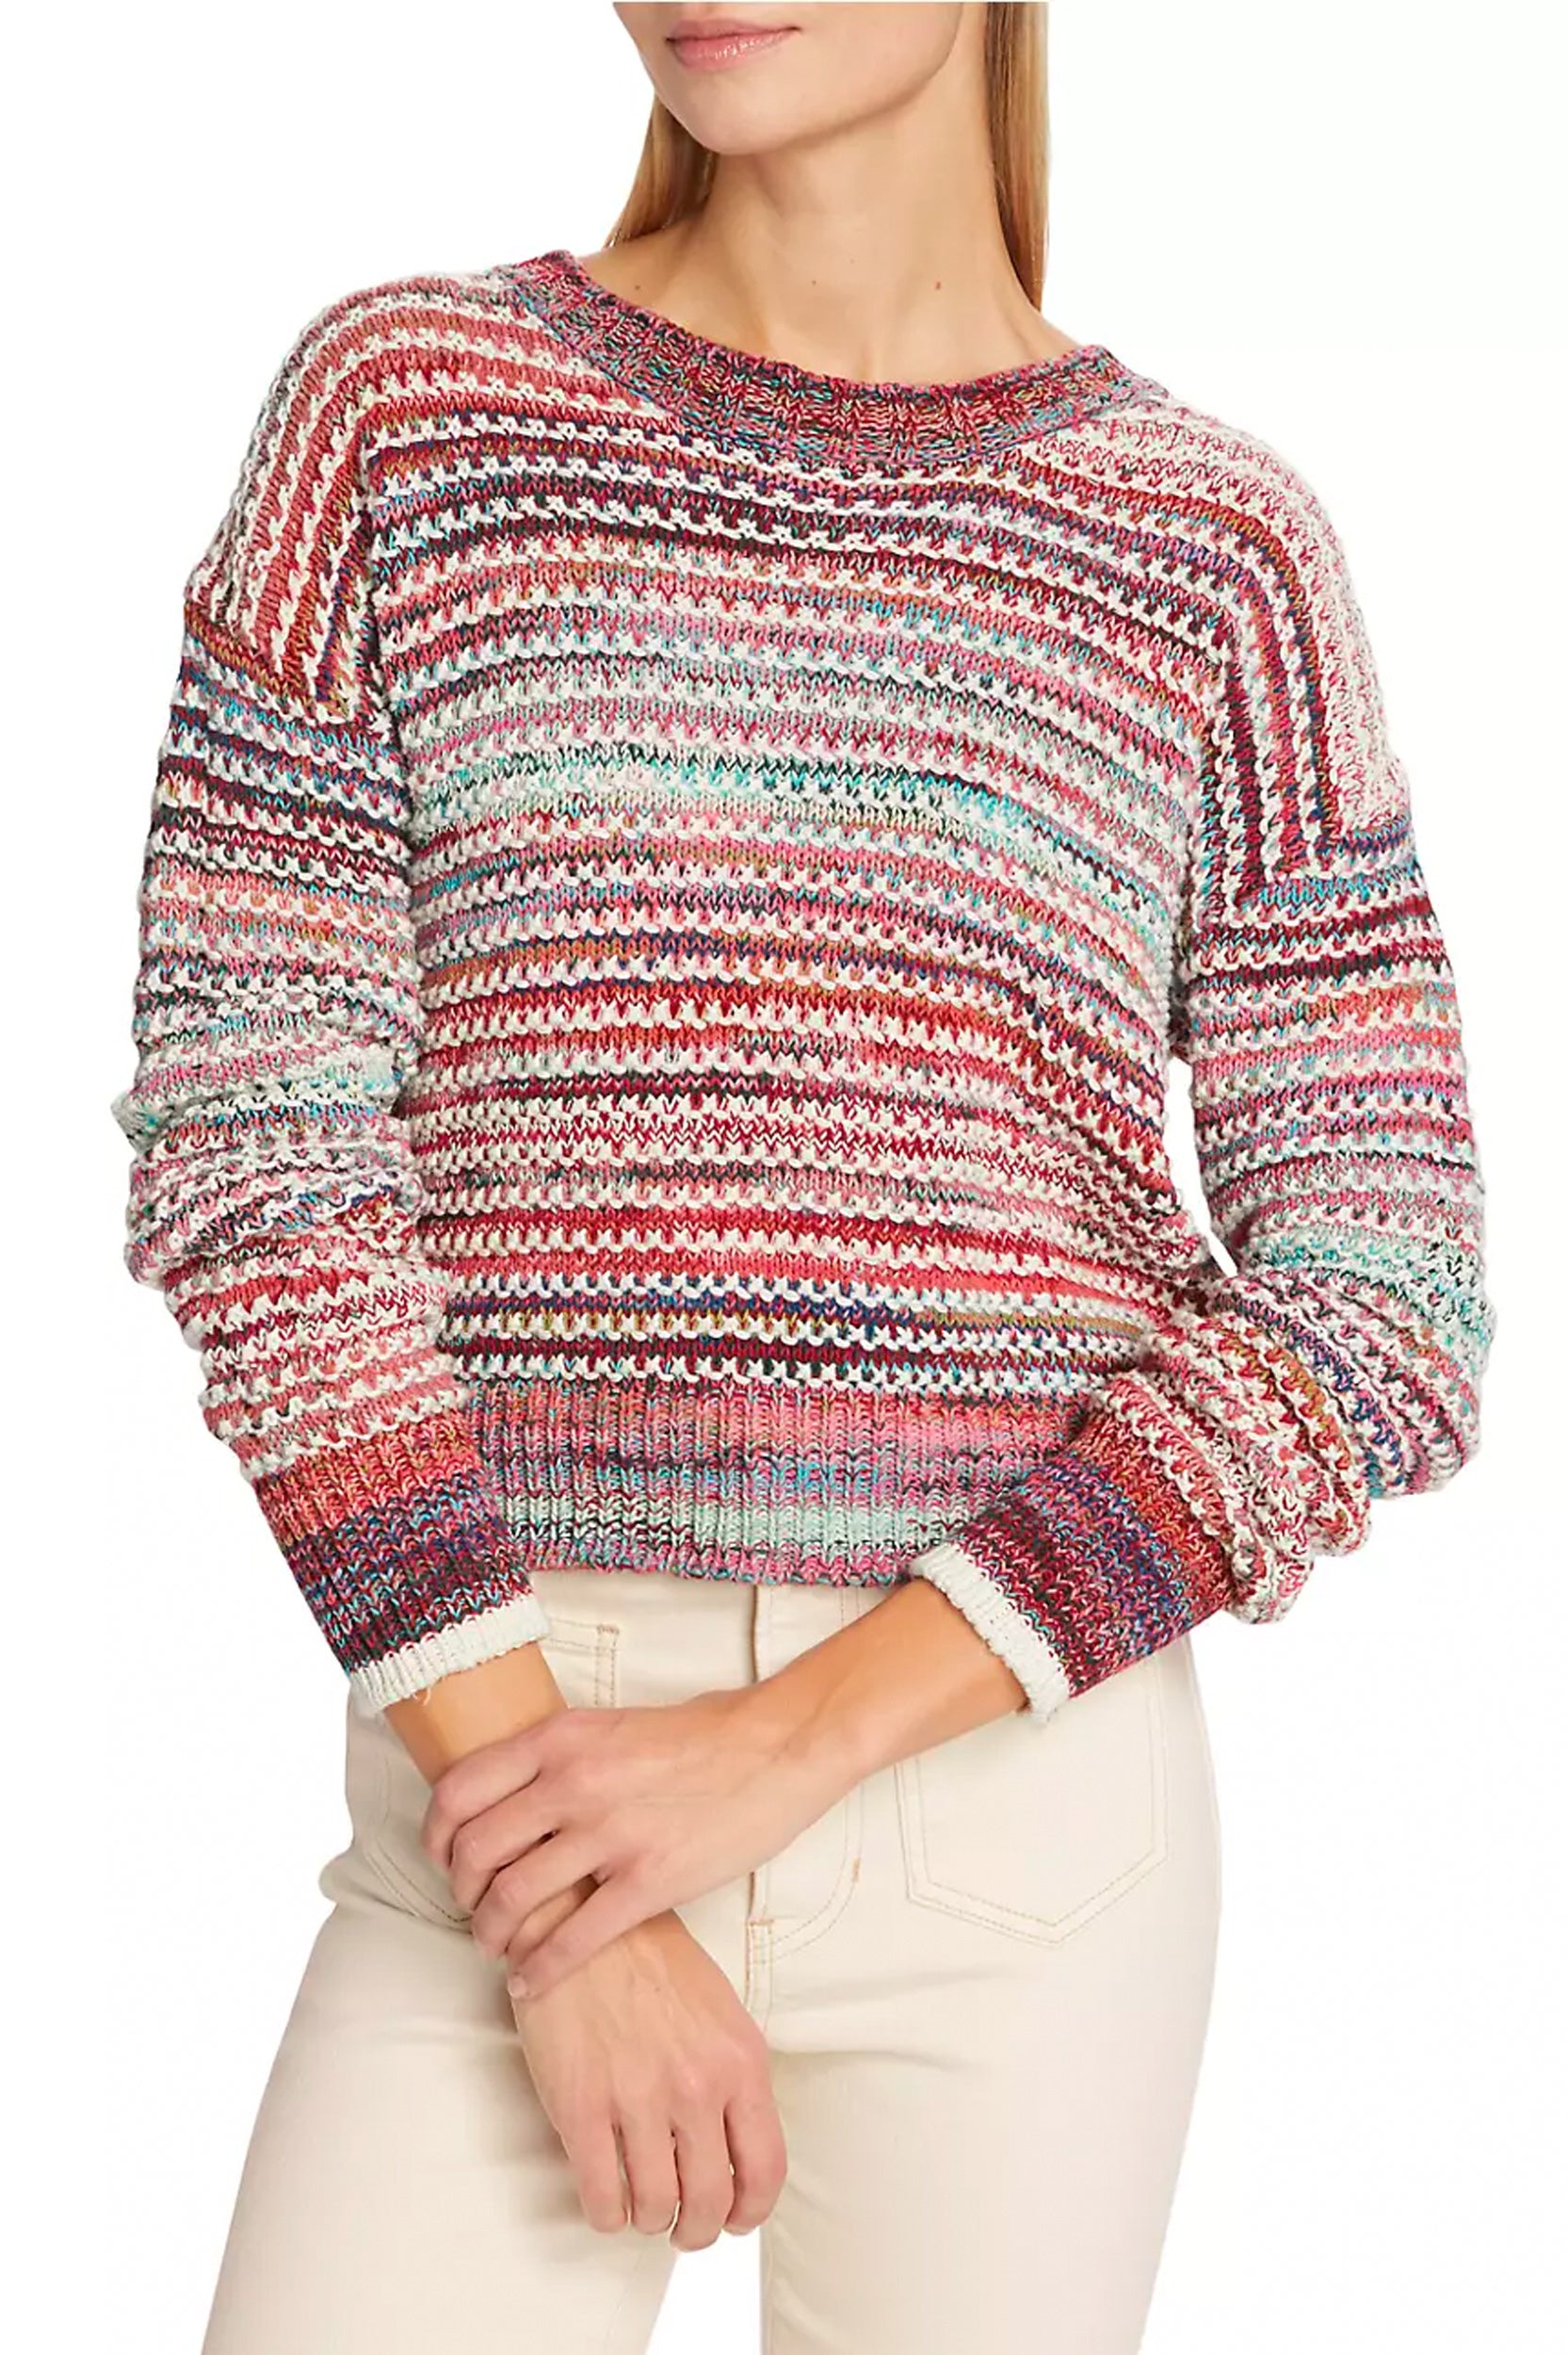 Asmara Sweater in Pink Multi